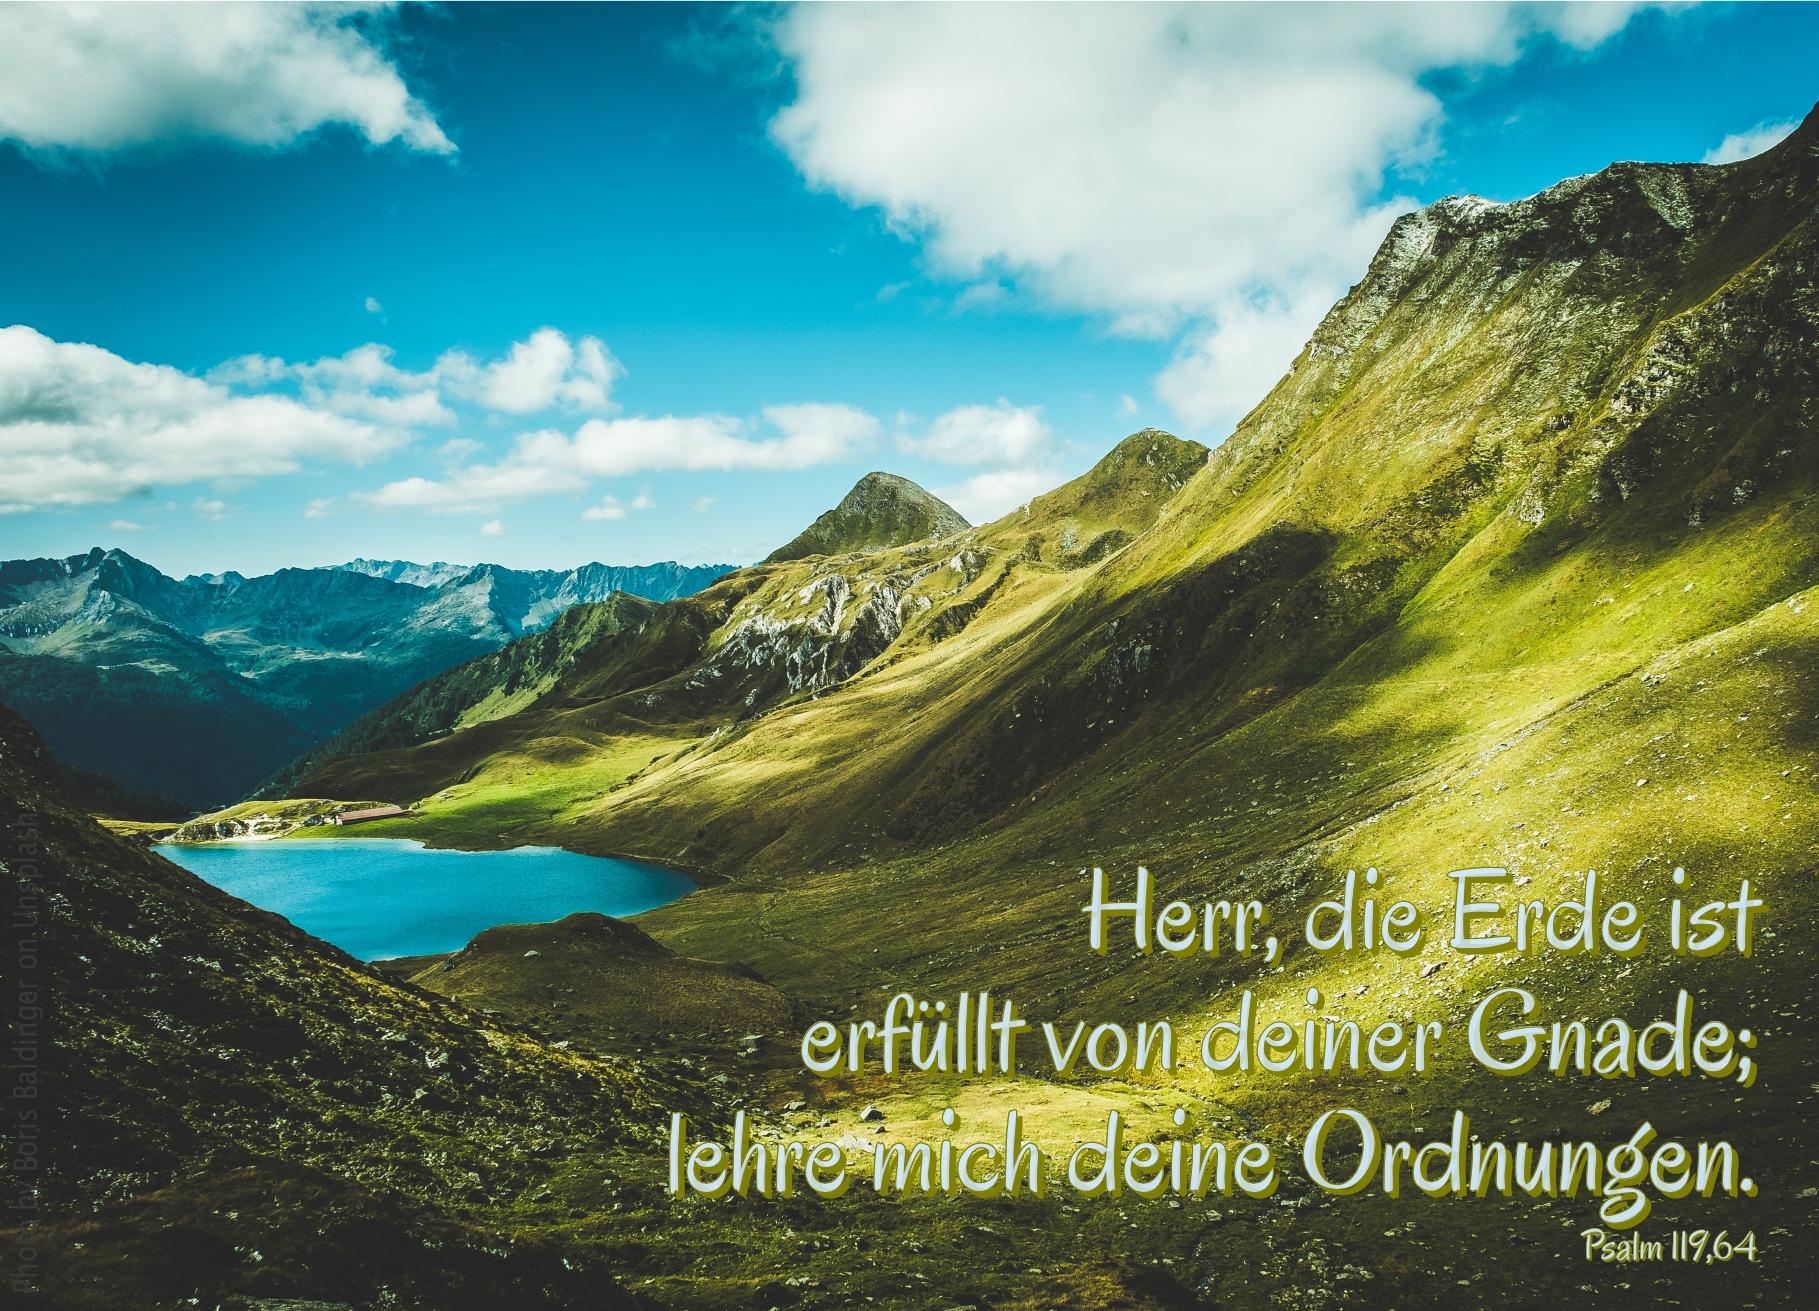 alt="Bergsee_umrahmt_von_gruenen_Haengen_erwartet_bibelhoerbuch_Strom_der_Heilung"